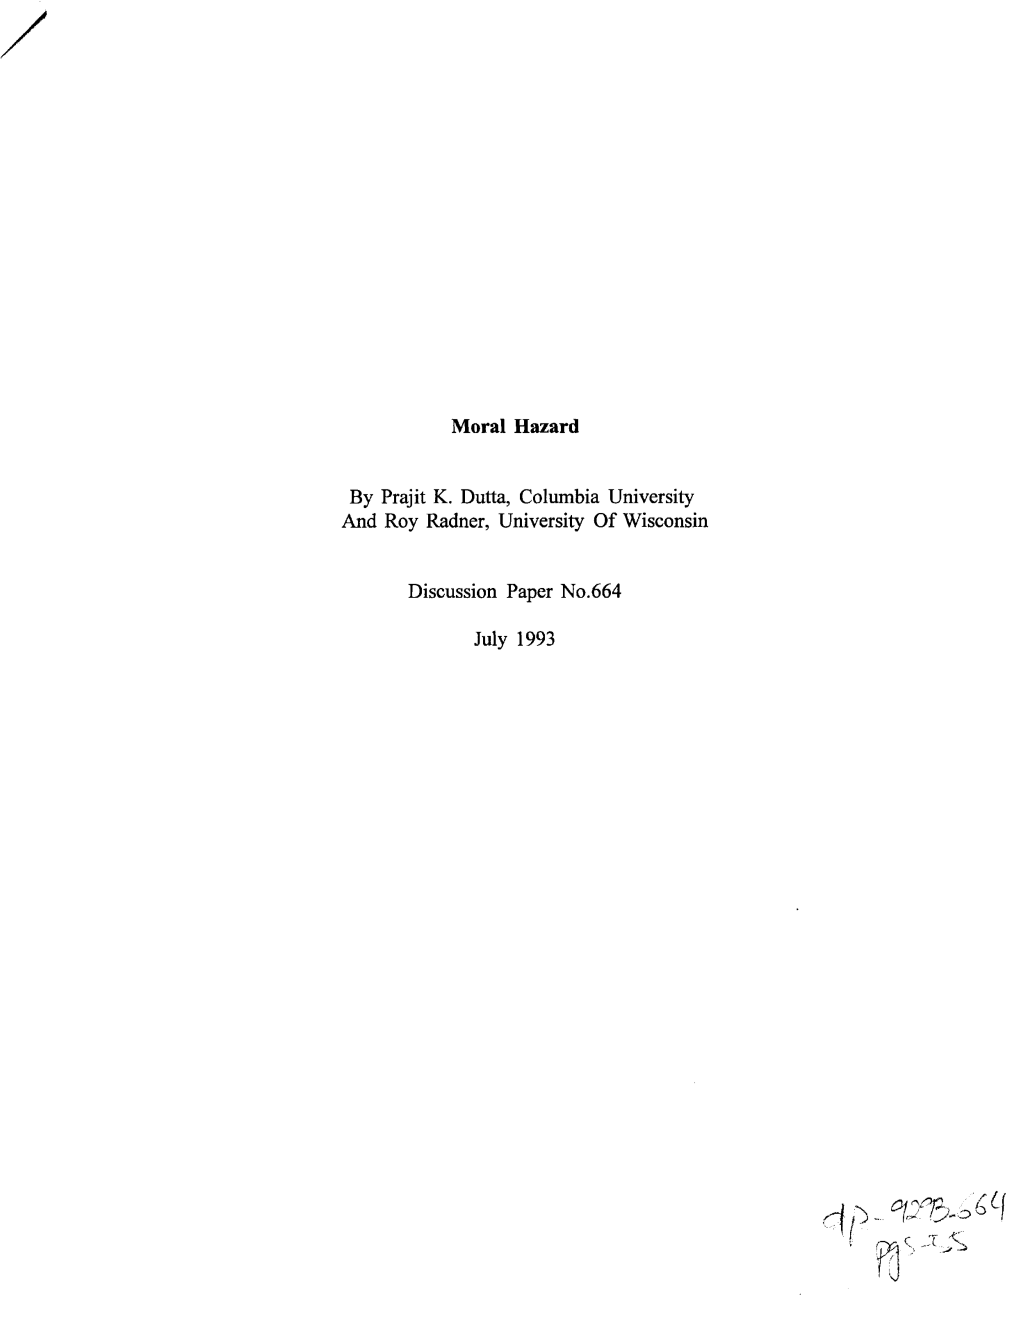 Moral Hazard by Prajit K. Dutta, Columbia University and Roy